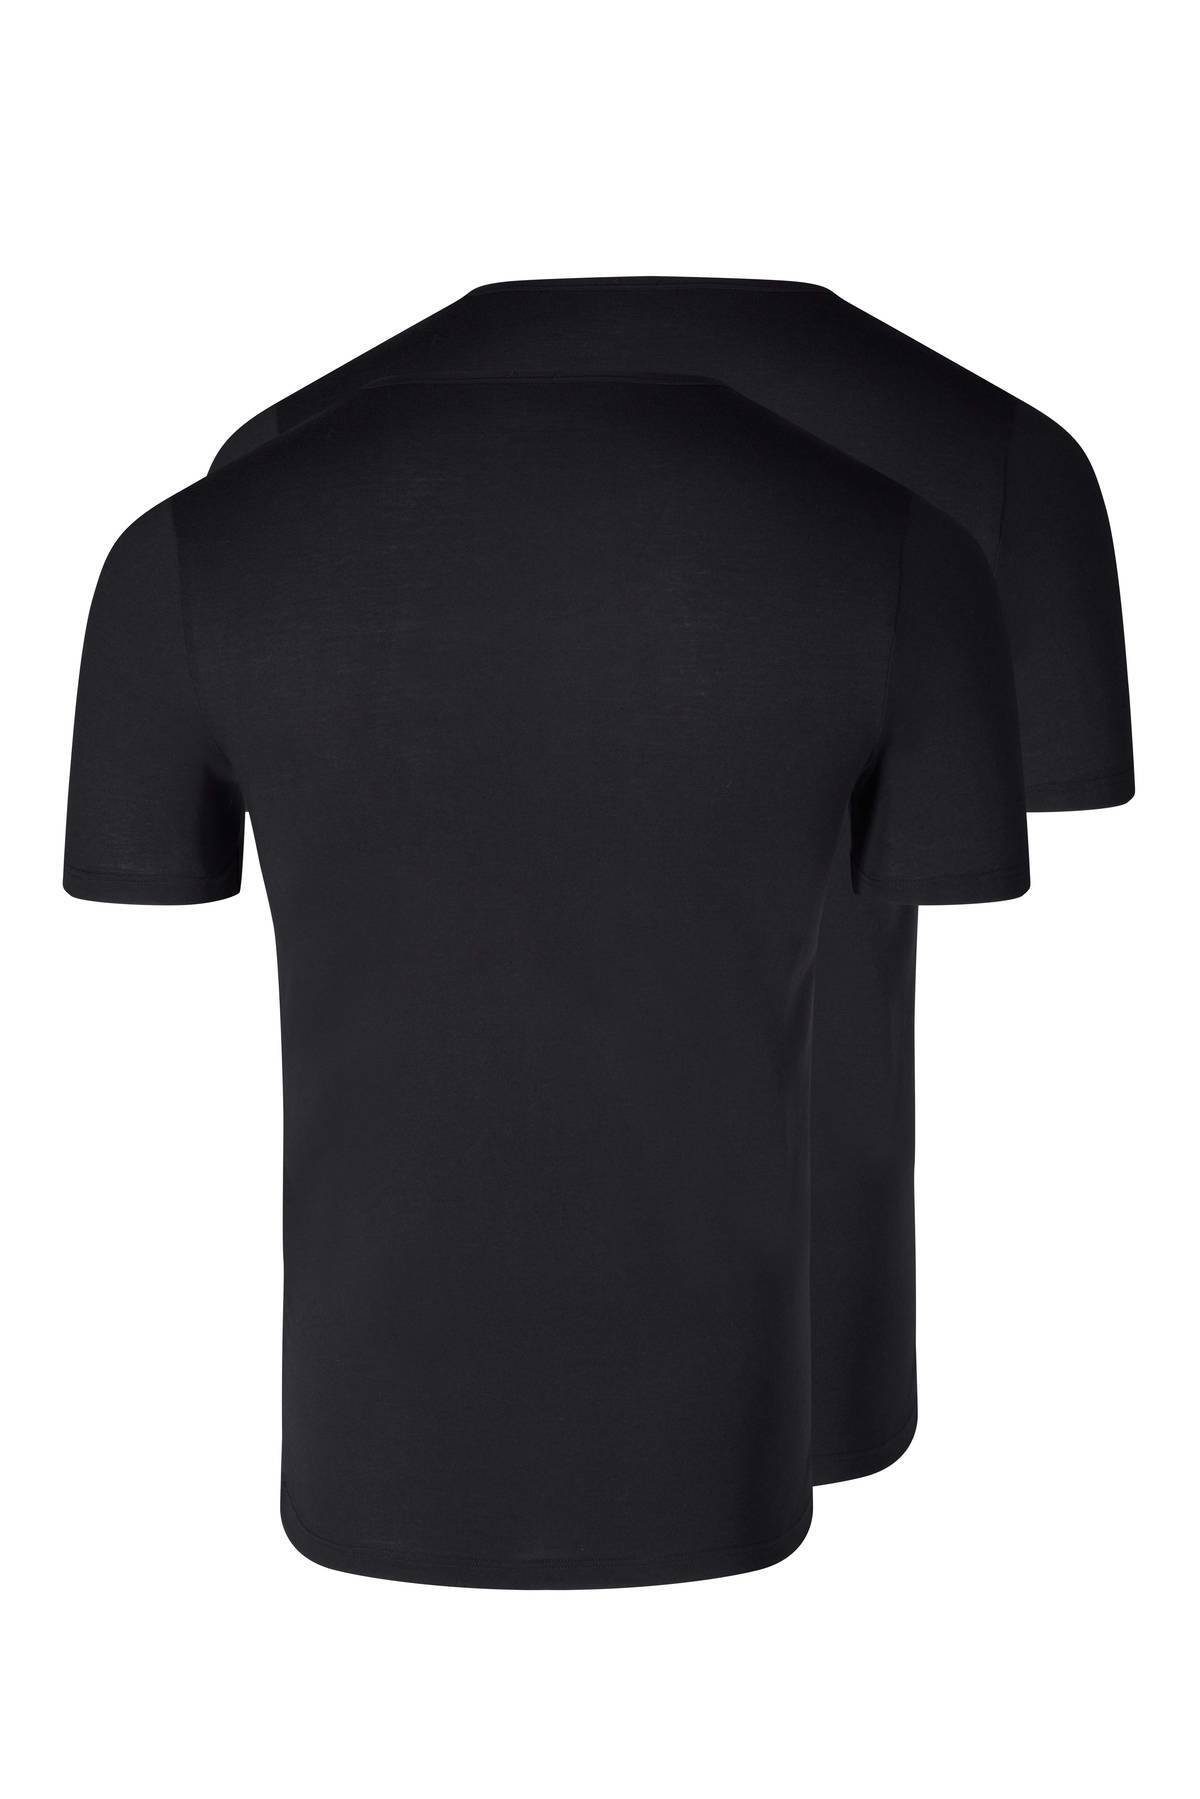 Skiny Unterhemd Herren T-Shirt, Pack 2er Schwarz Unterhemd, - Halbarm